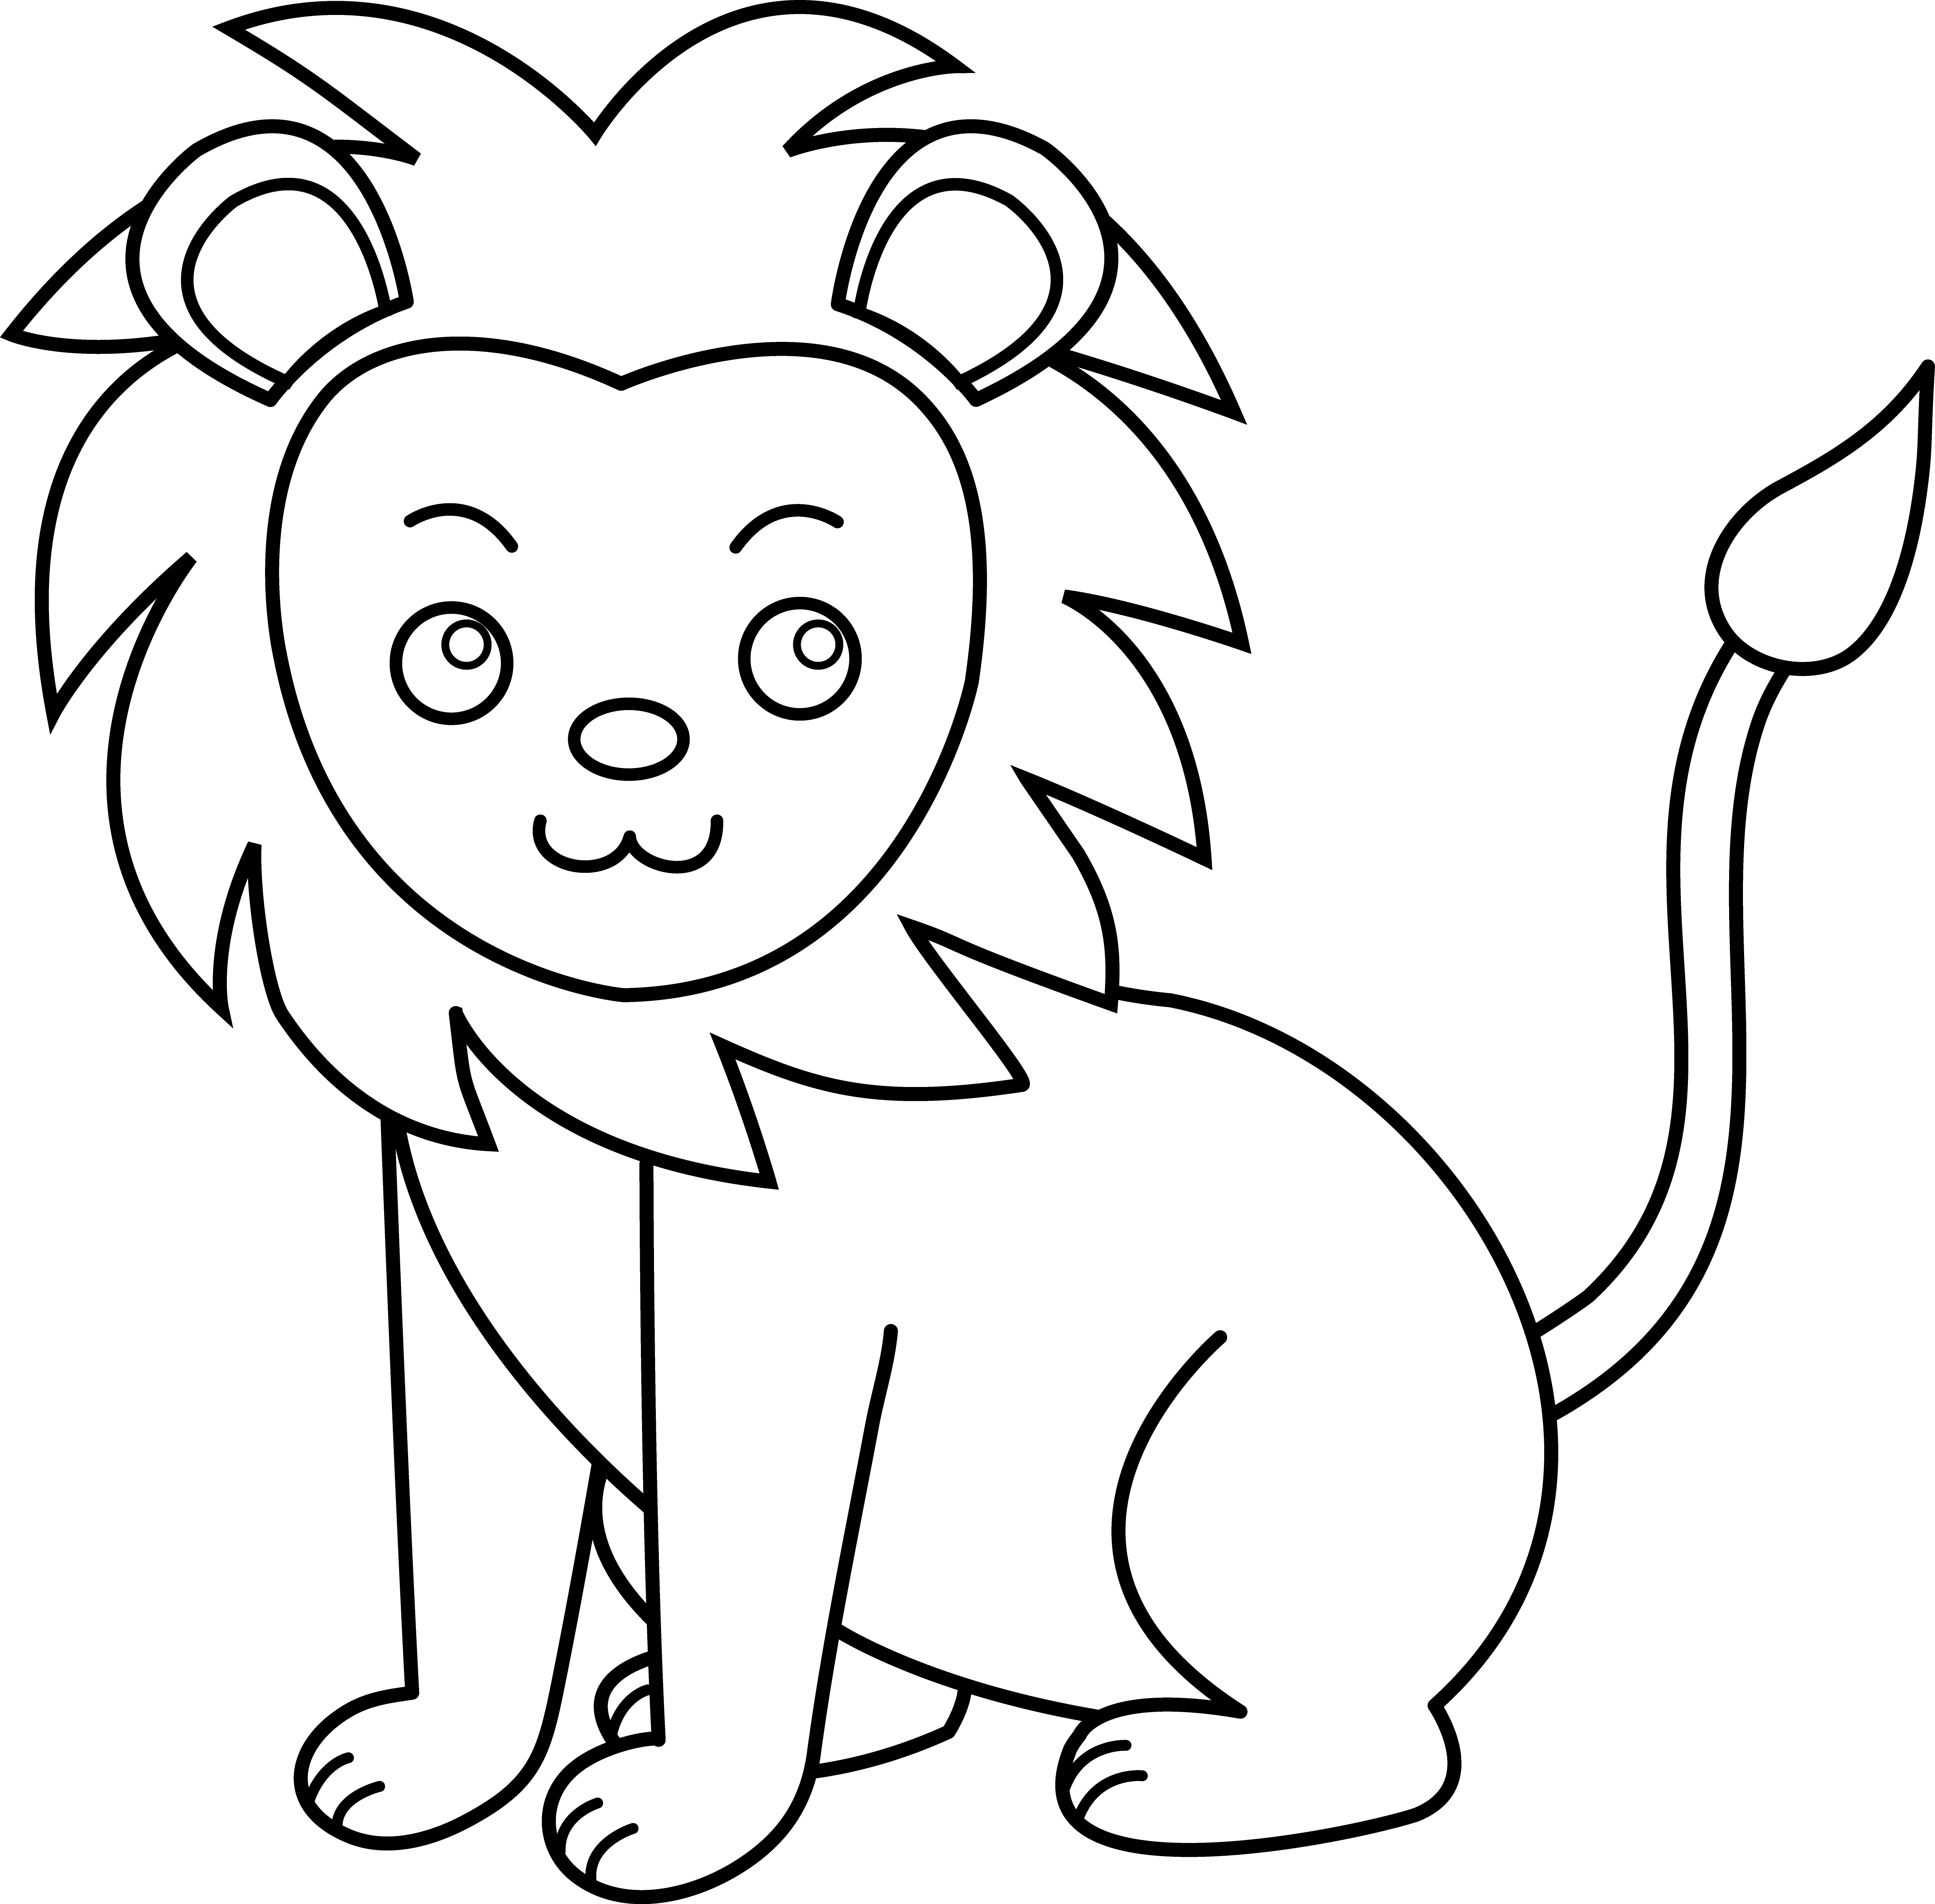 Cute Lion Line Art - Free Clip Art